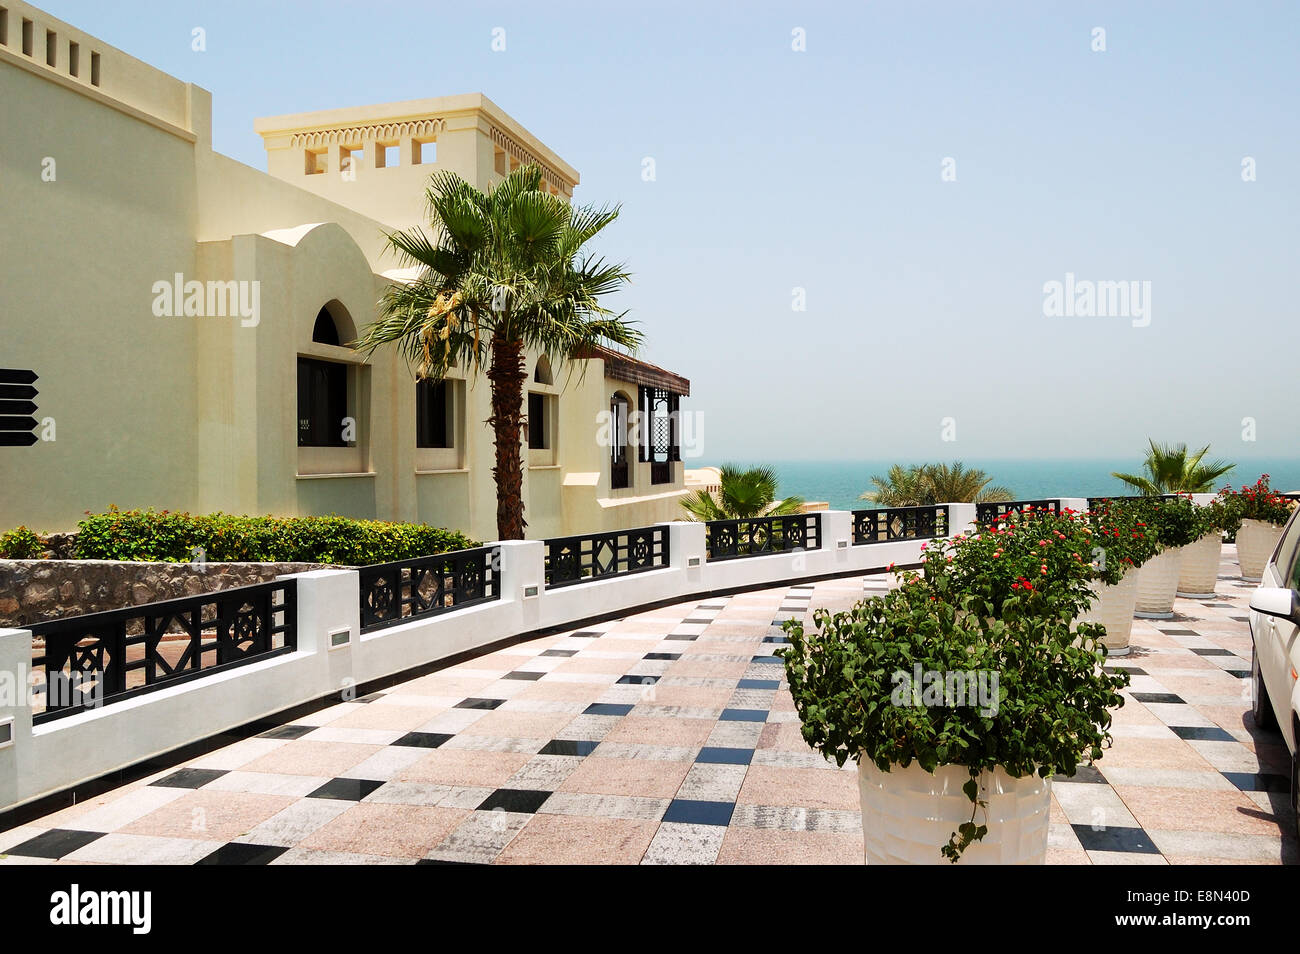 Holliday villa at the luxury hotel, Ras Al Khaimah, UAE Stock Photo